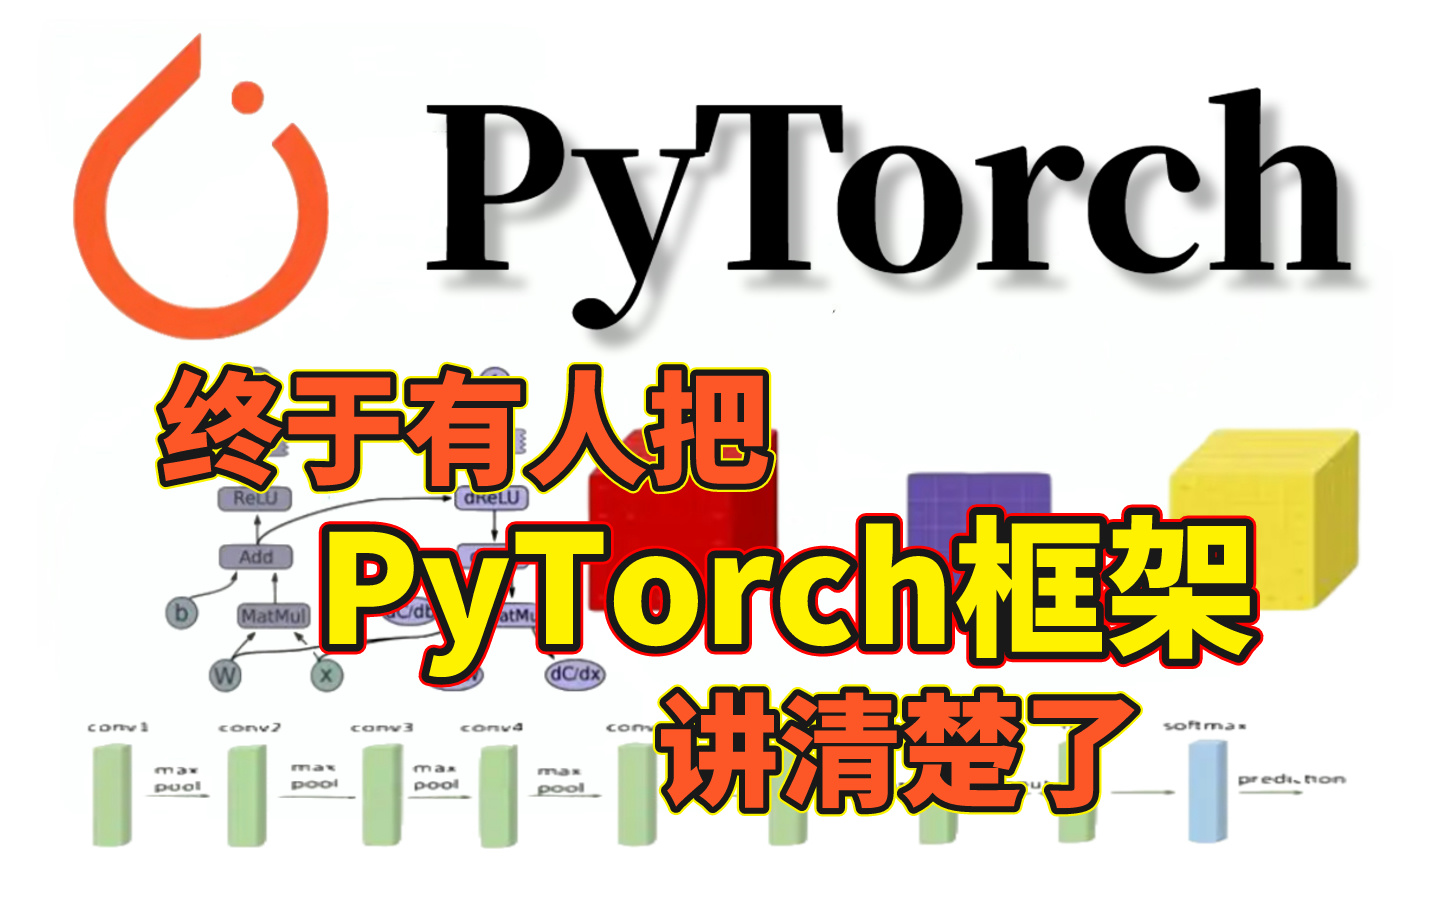 PyTorch就得这么学！终于有人把pytorch框架讲清楚了，草履虫都能看懂，12小时带你从入门到进阶-人工智能|深度学习|pytorch